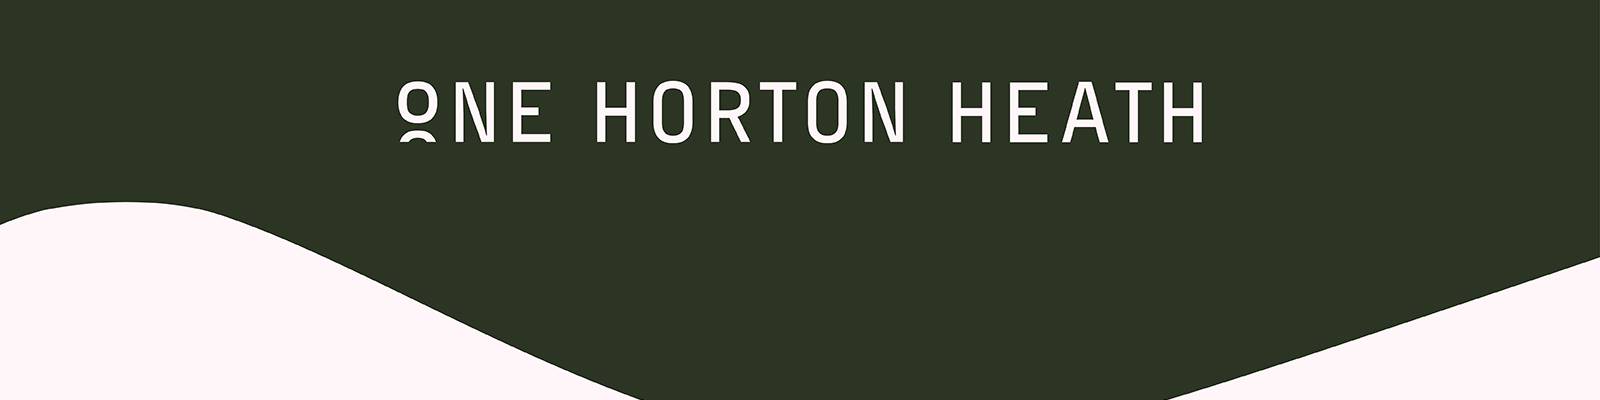 One Horton Heath Web Site Banner Header 1600 X 640 (300Px Max 5Mb Max)